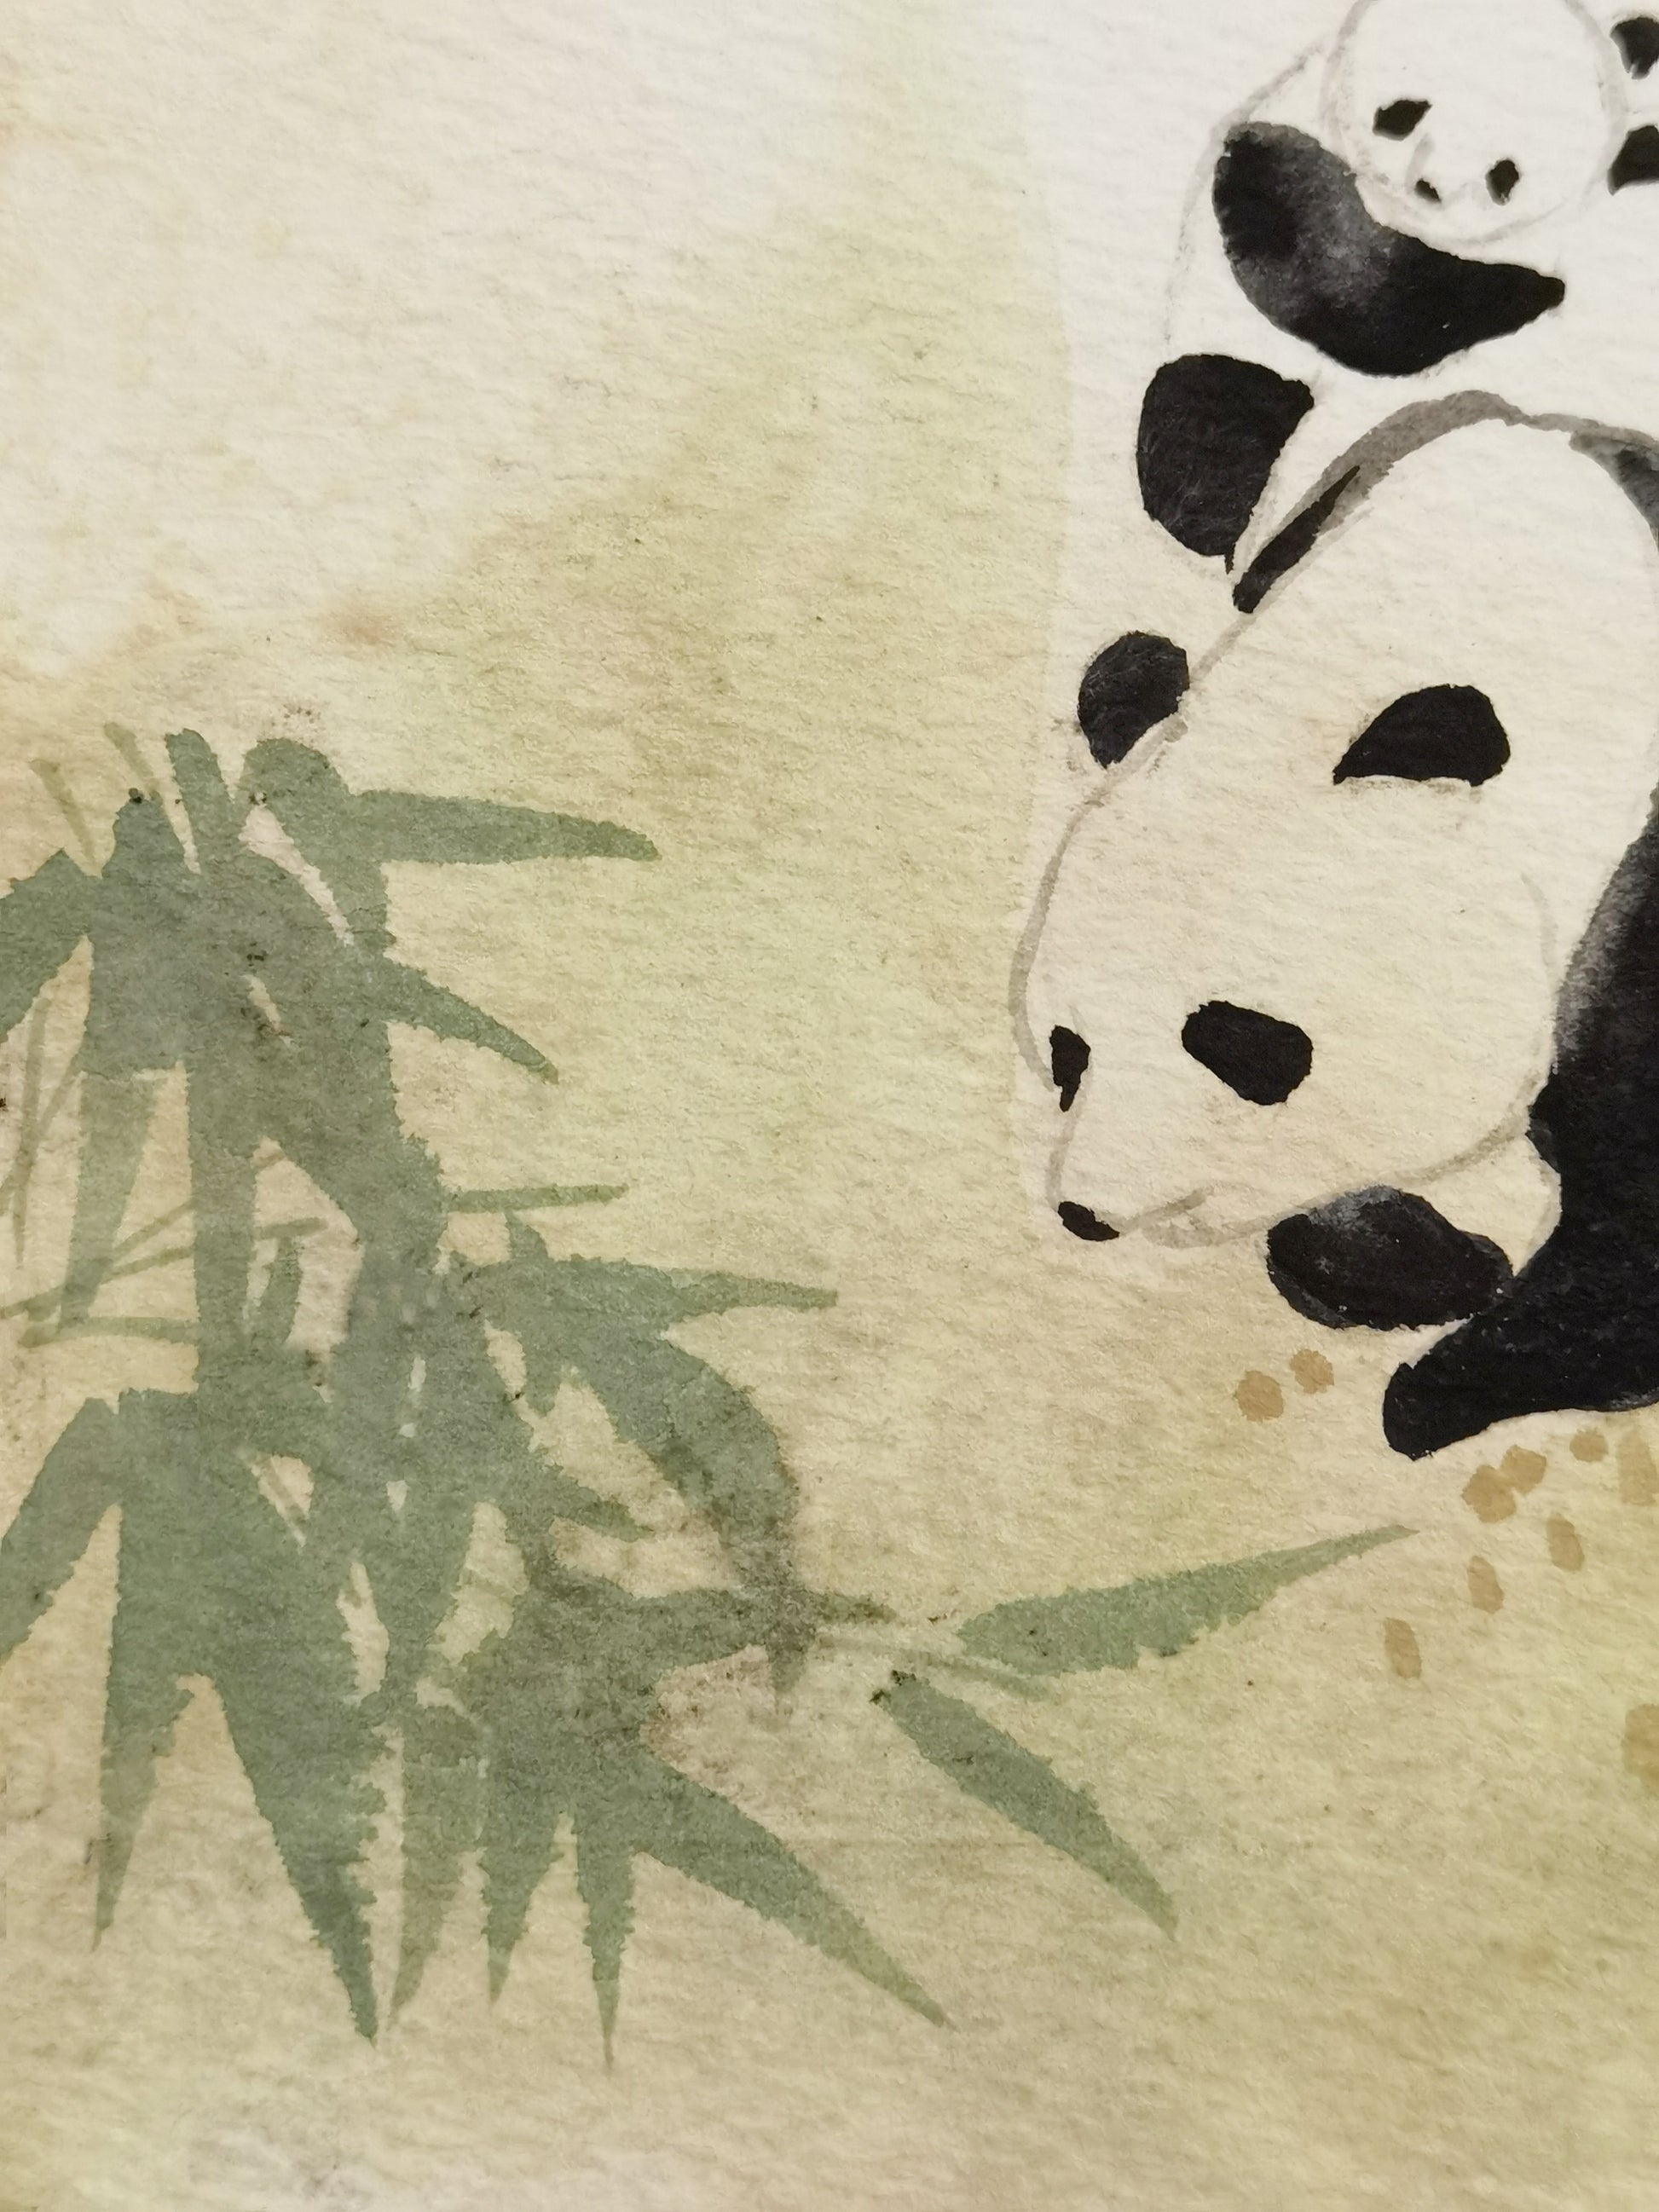 Panda Vividland Handmade Art Printing Mum&Baby Bamboo Playful Cute with Wood Frame